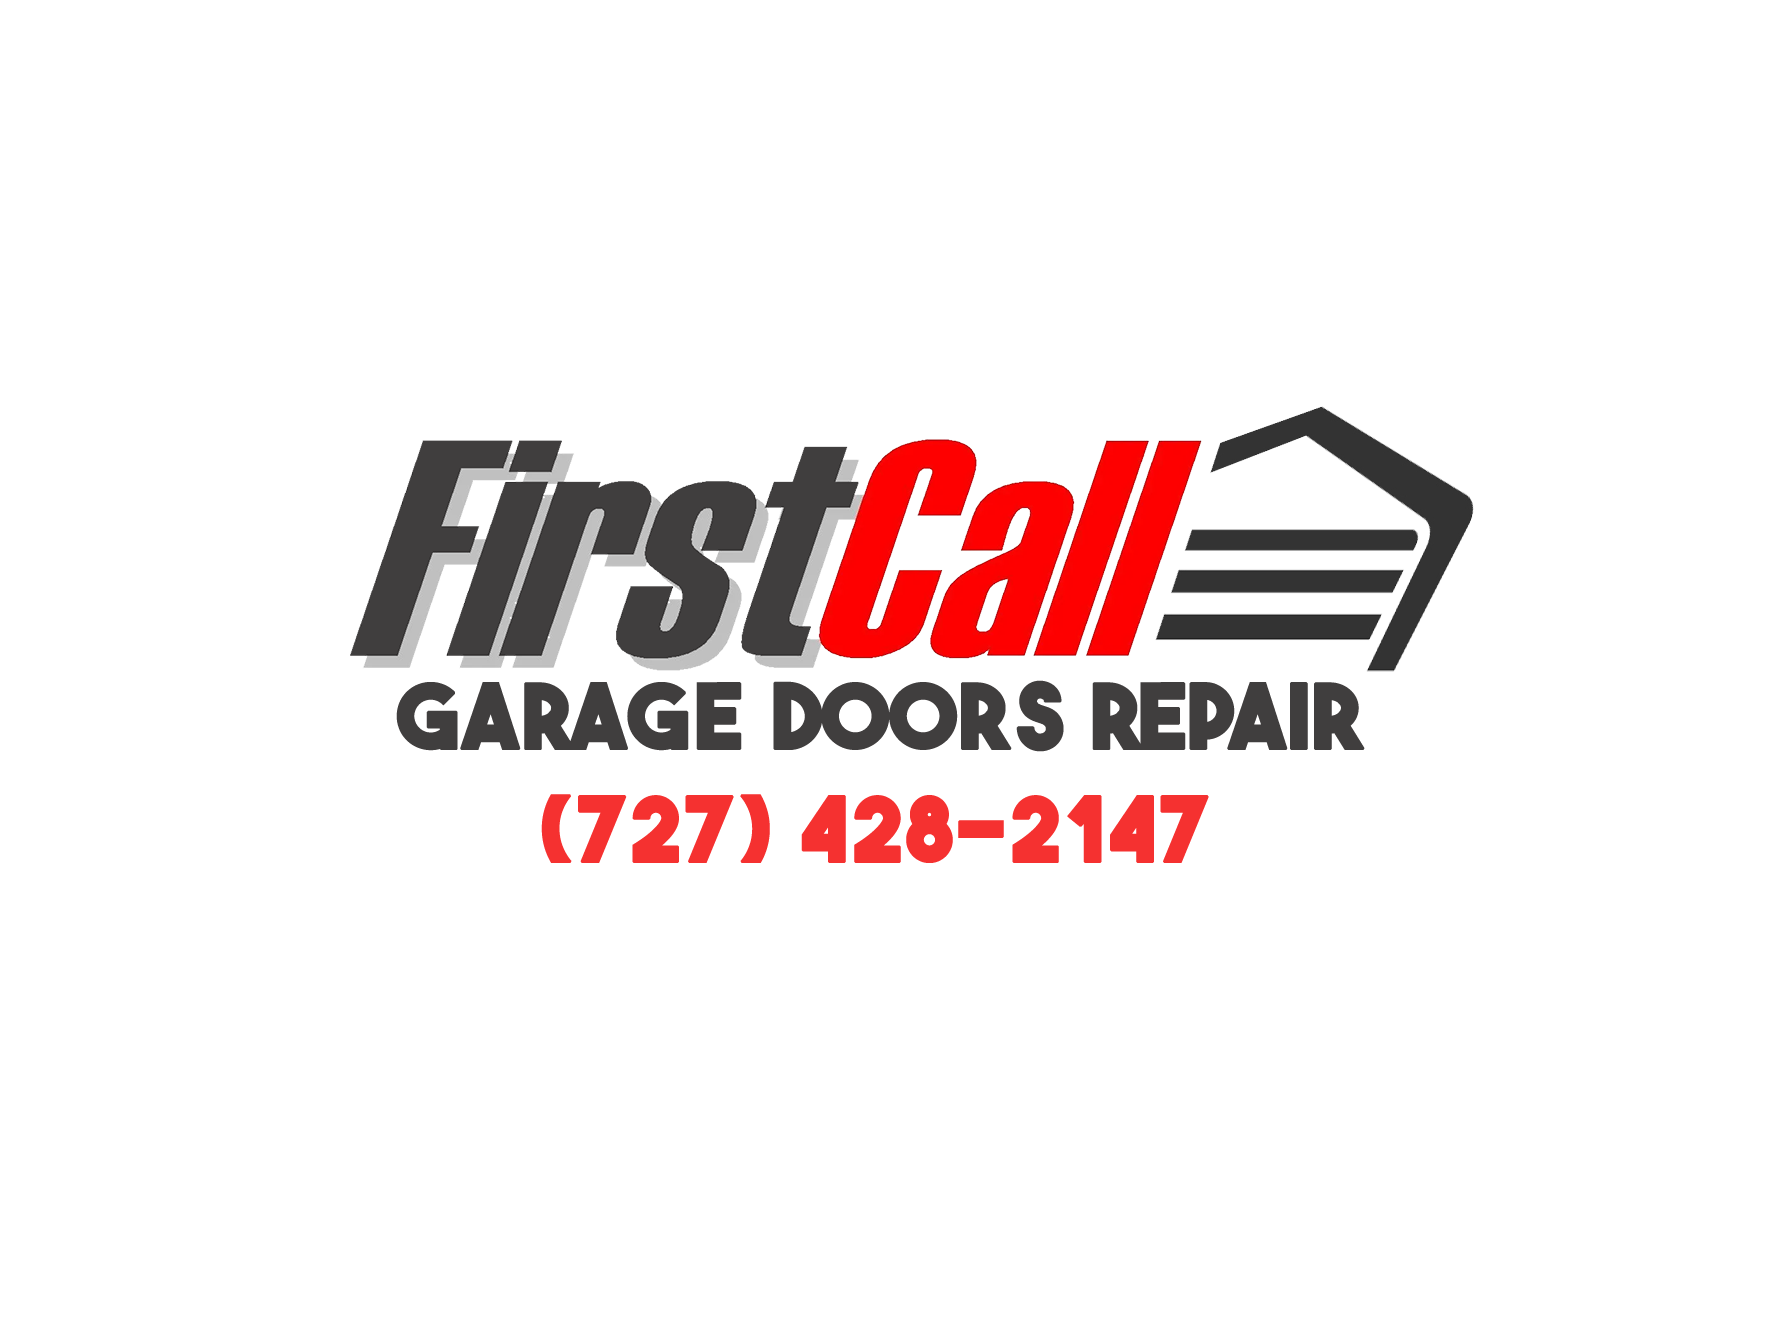 First Call Garage Doors Repair's Logo